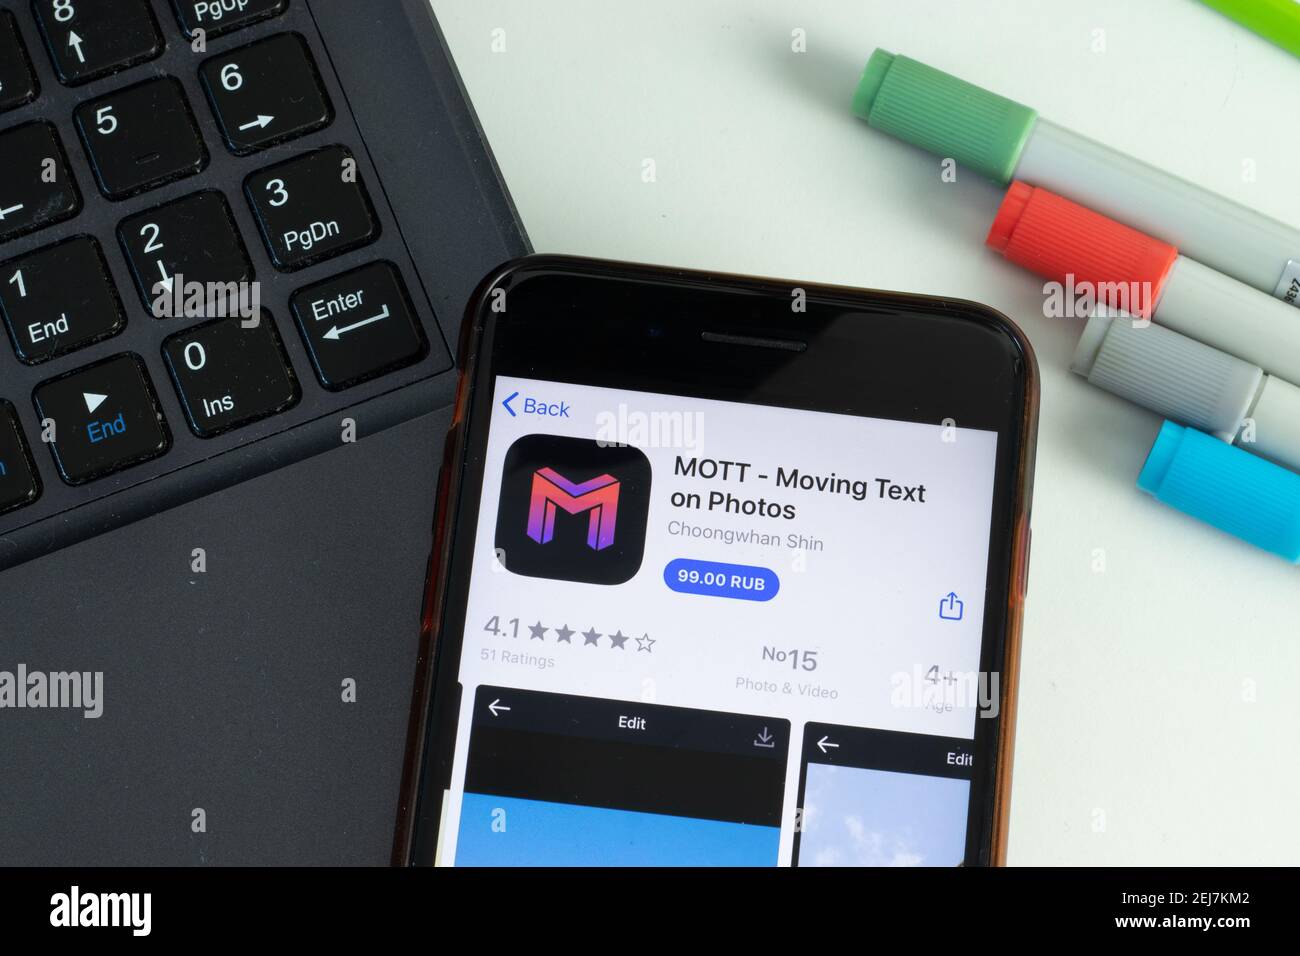 New York, USA - 17. Februar 2021: MOTT Moving Text on photos mobile App icon on on phone screen, illustrative Editorial Stockfoto